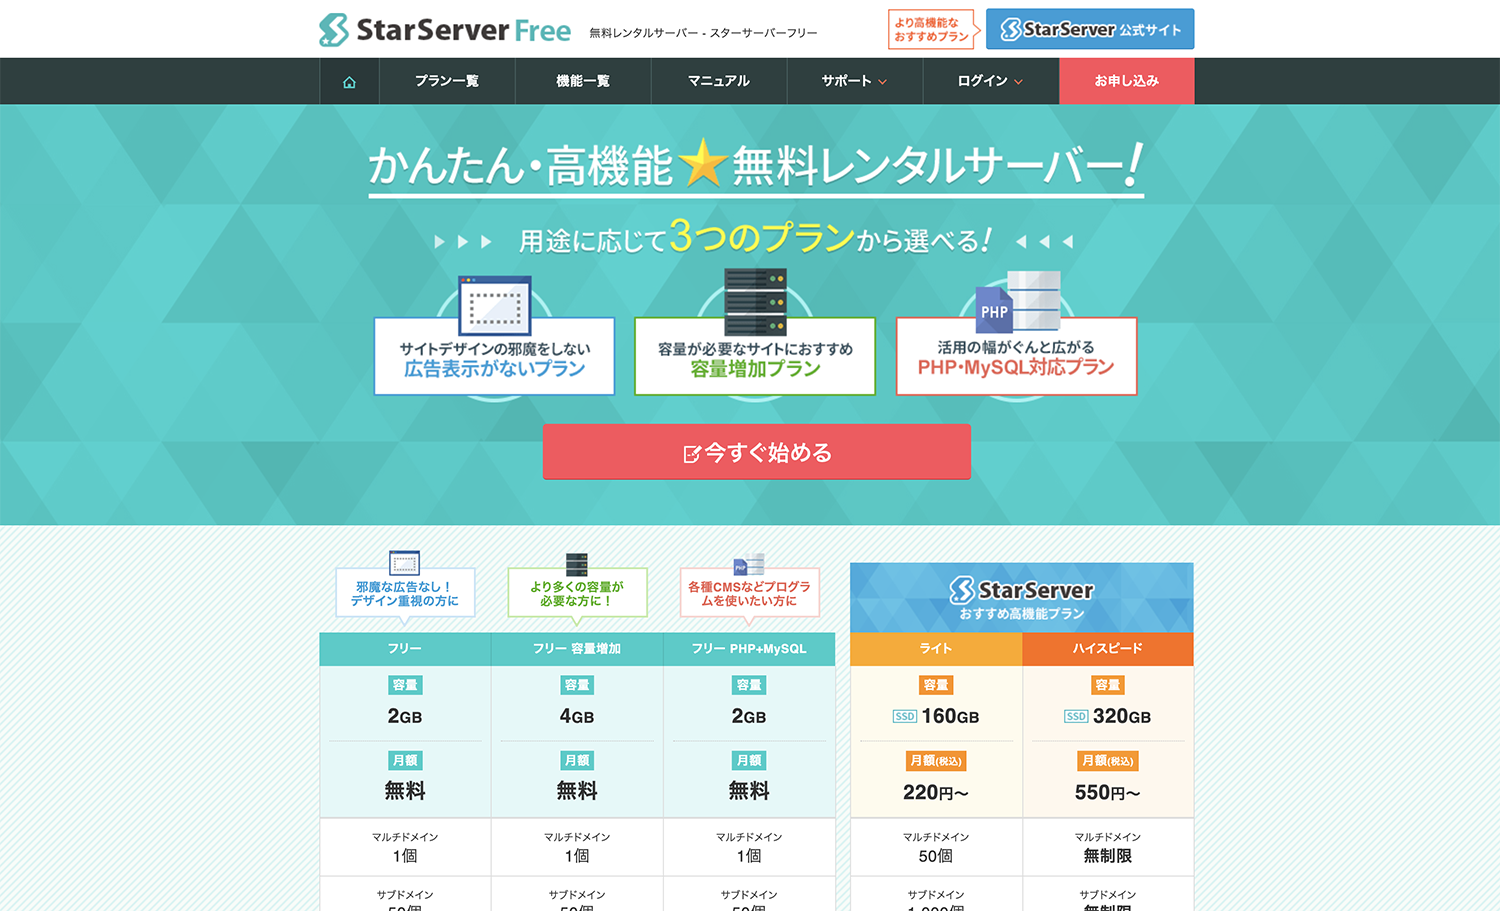 StarServer Freeの公式ホームページ